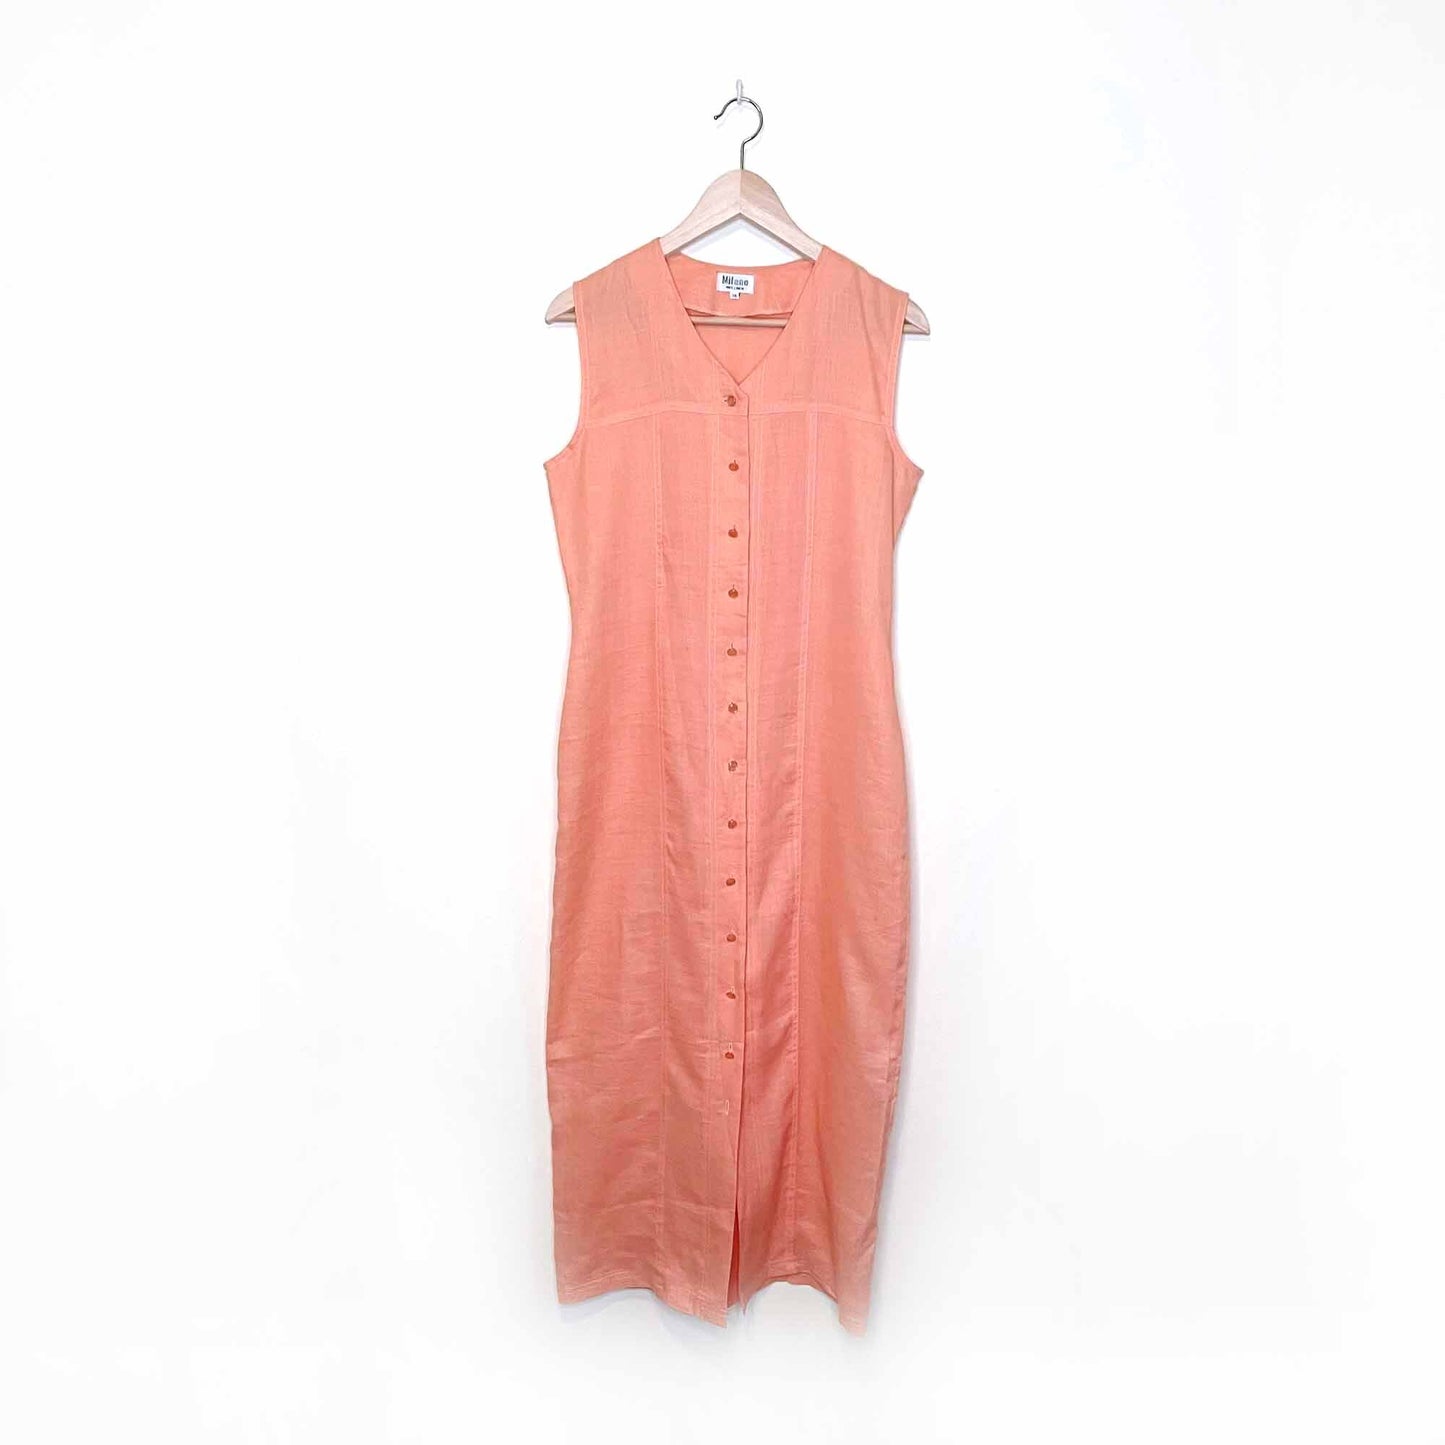 vintage milano 100% linen button down dress - size 38